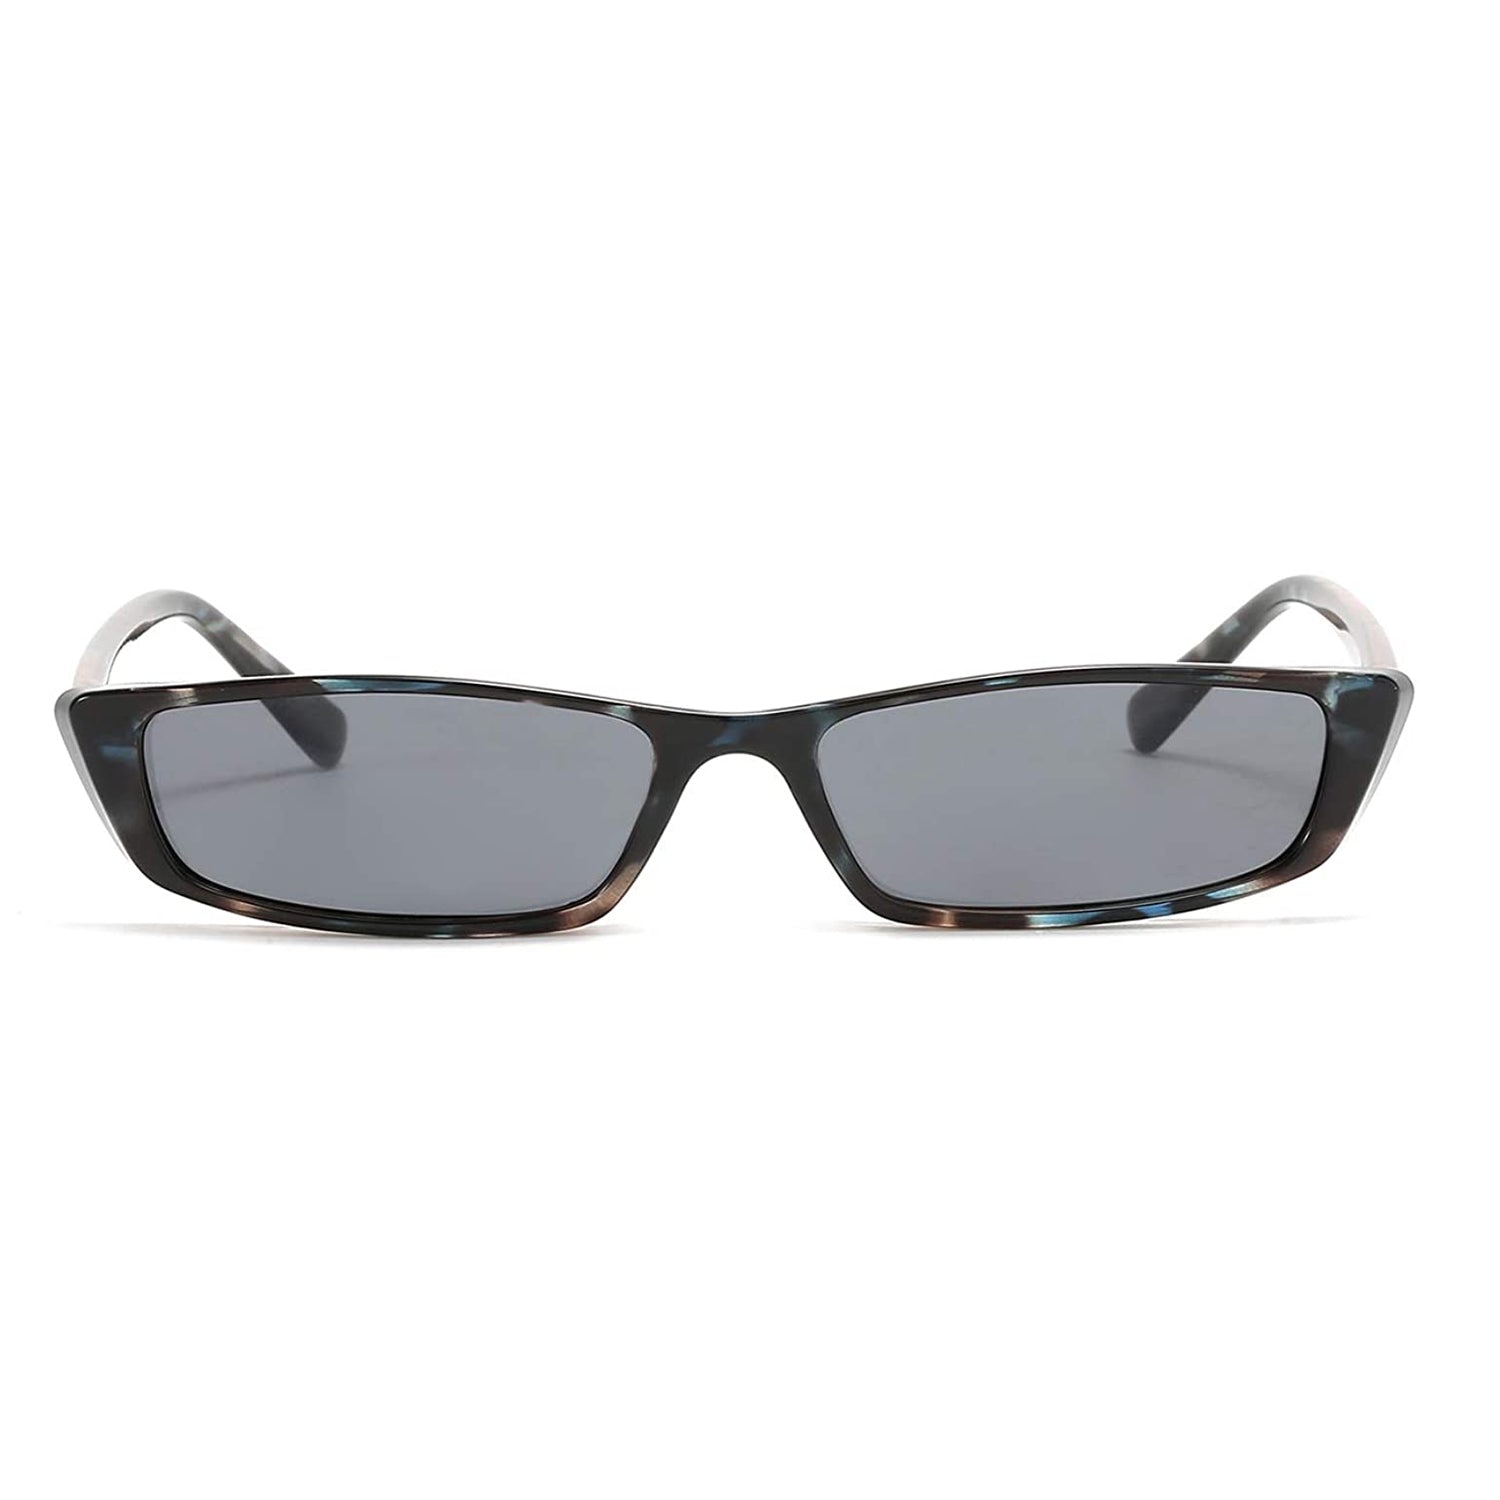 LVIOE Vintage Rectangle Small Frame Sunglasses, Tortoise - LVIOE